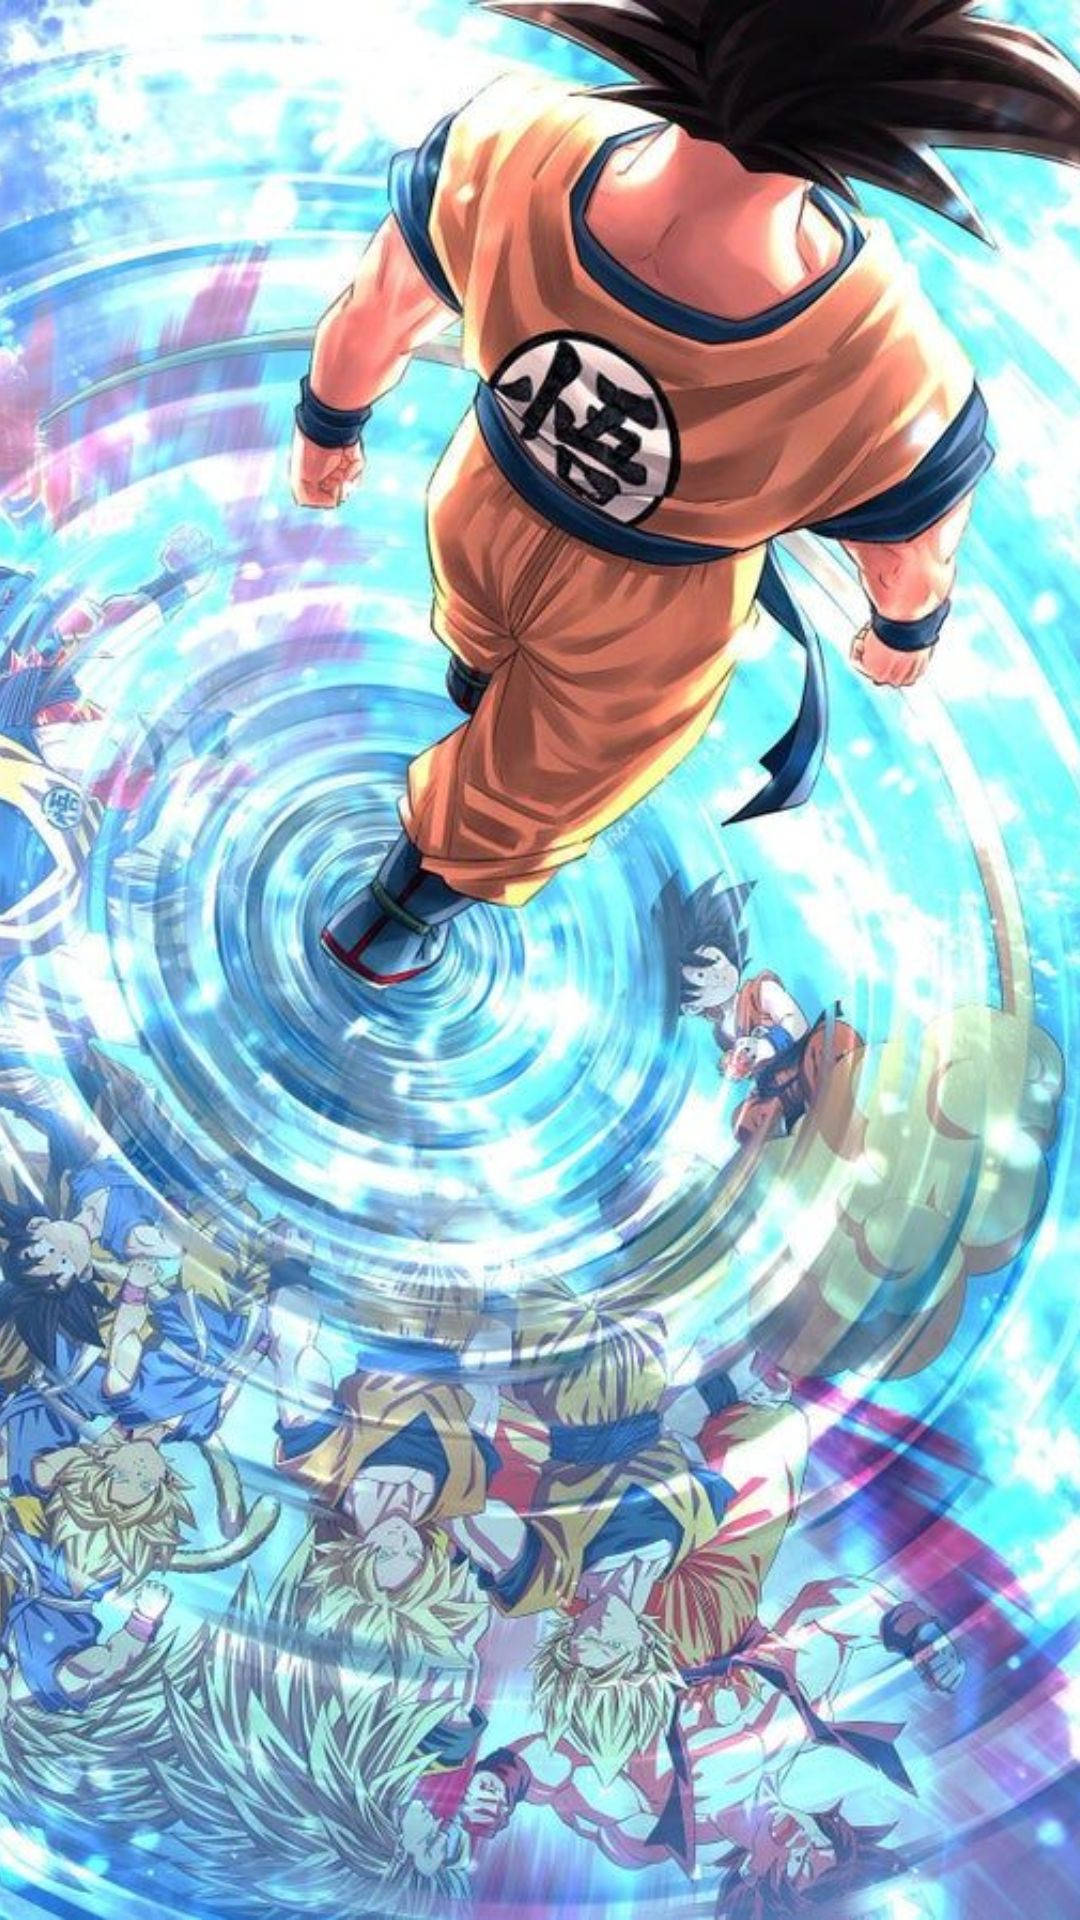 Caption: Epic Saiyan Battle Display - Dragon Ball Z Iphone Wallpaper